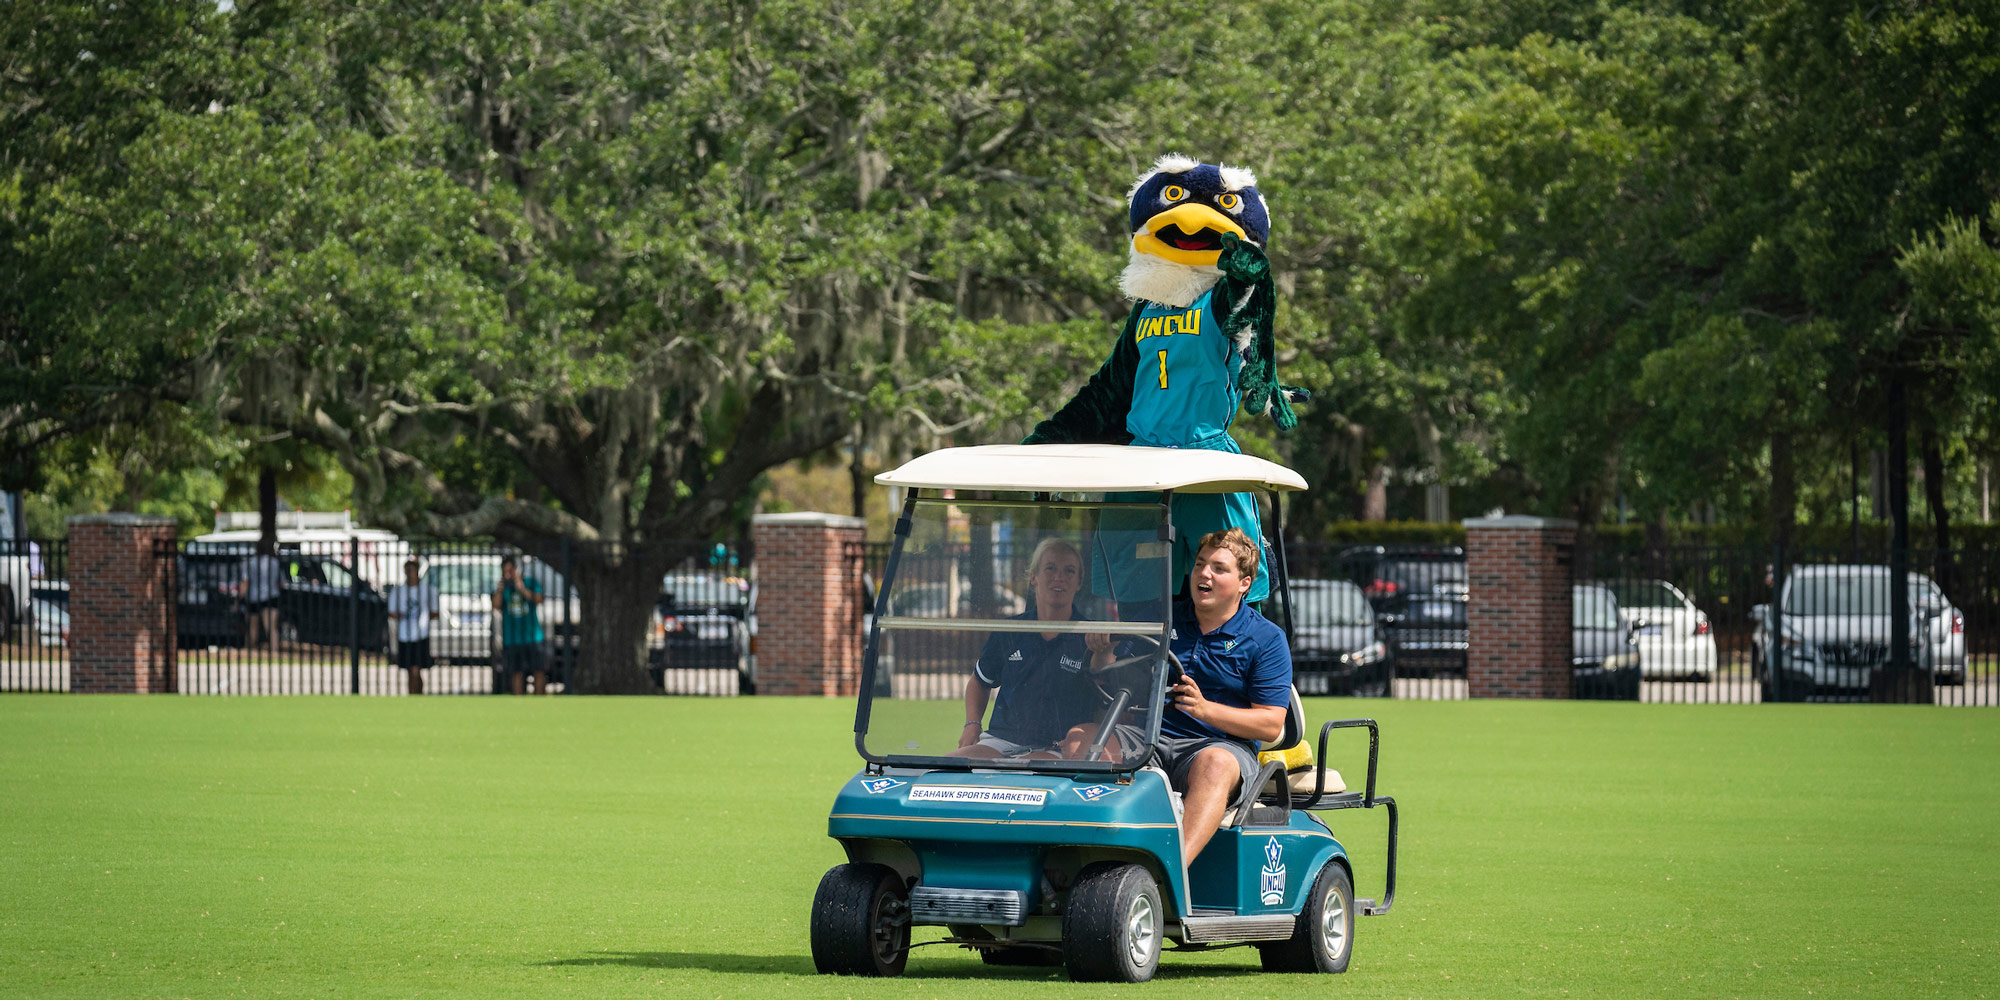 Our Mascot Sammy Seahawk rides in a Golf cart